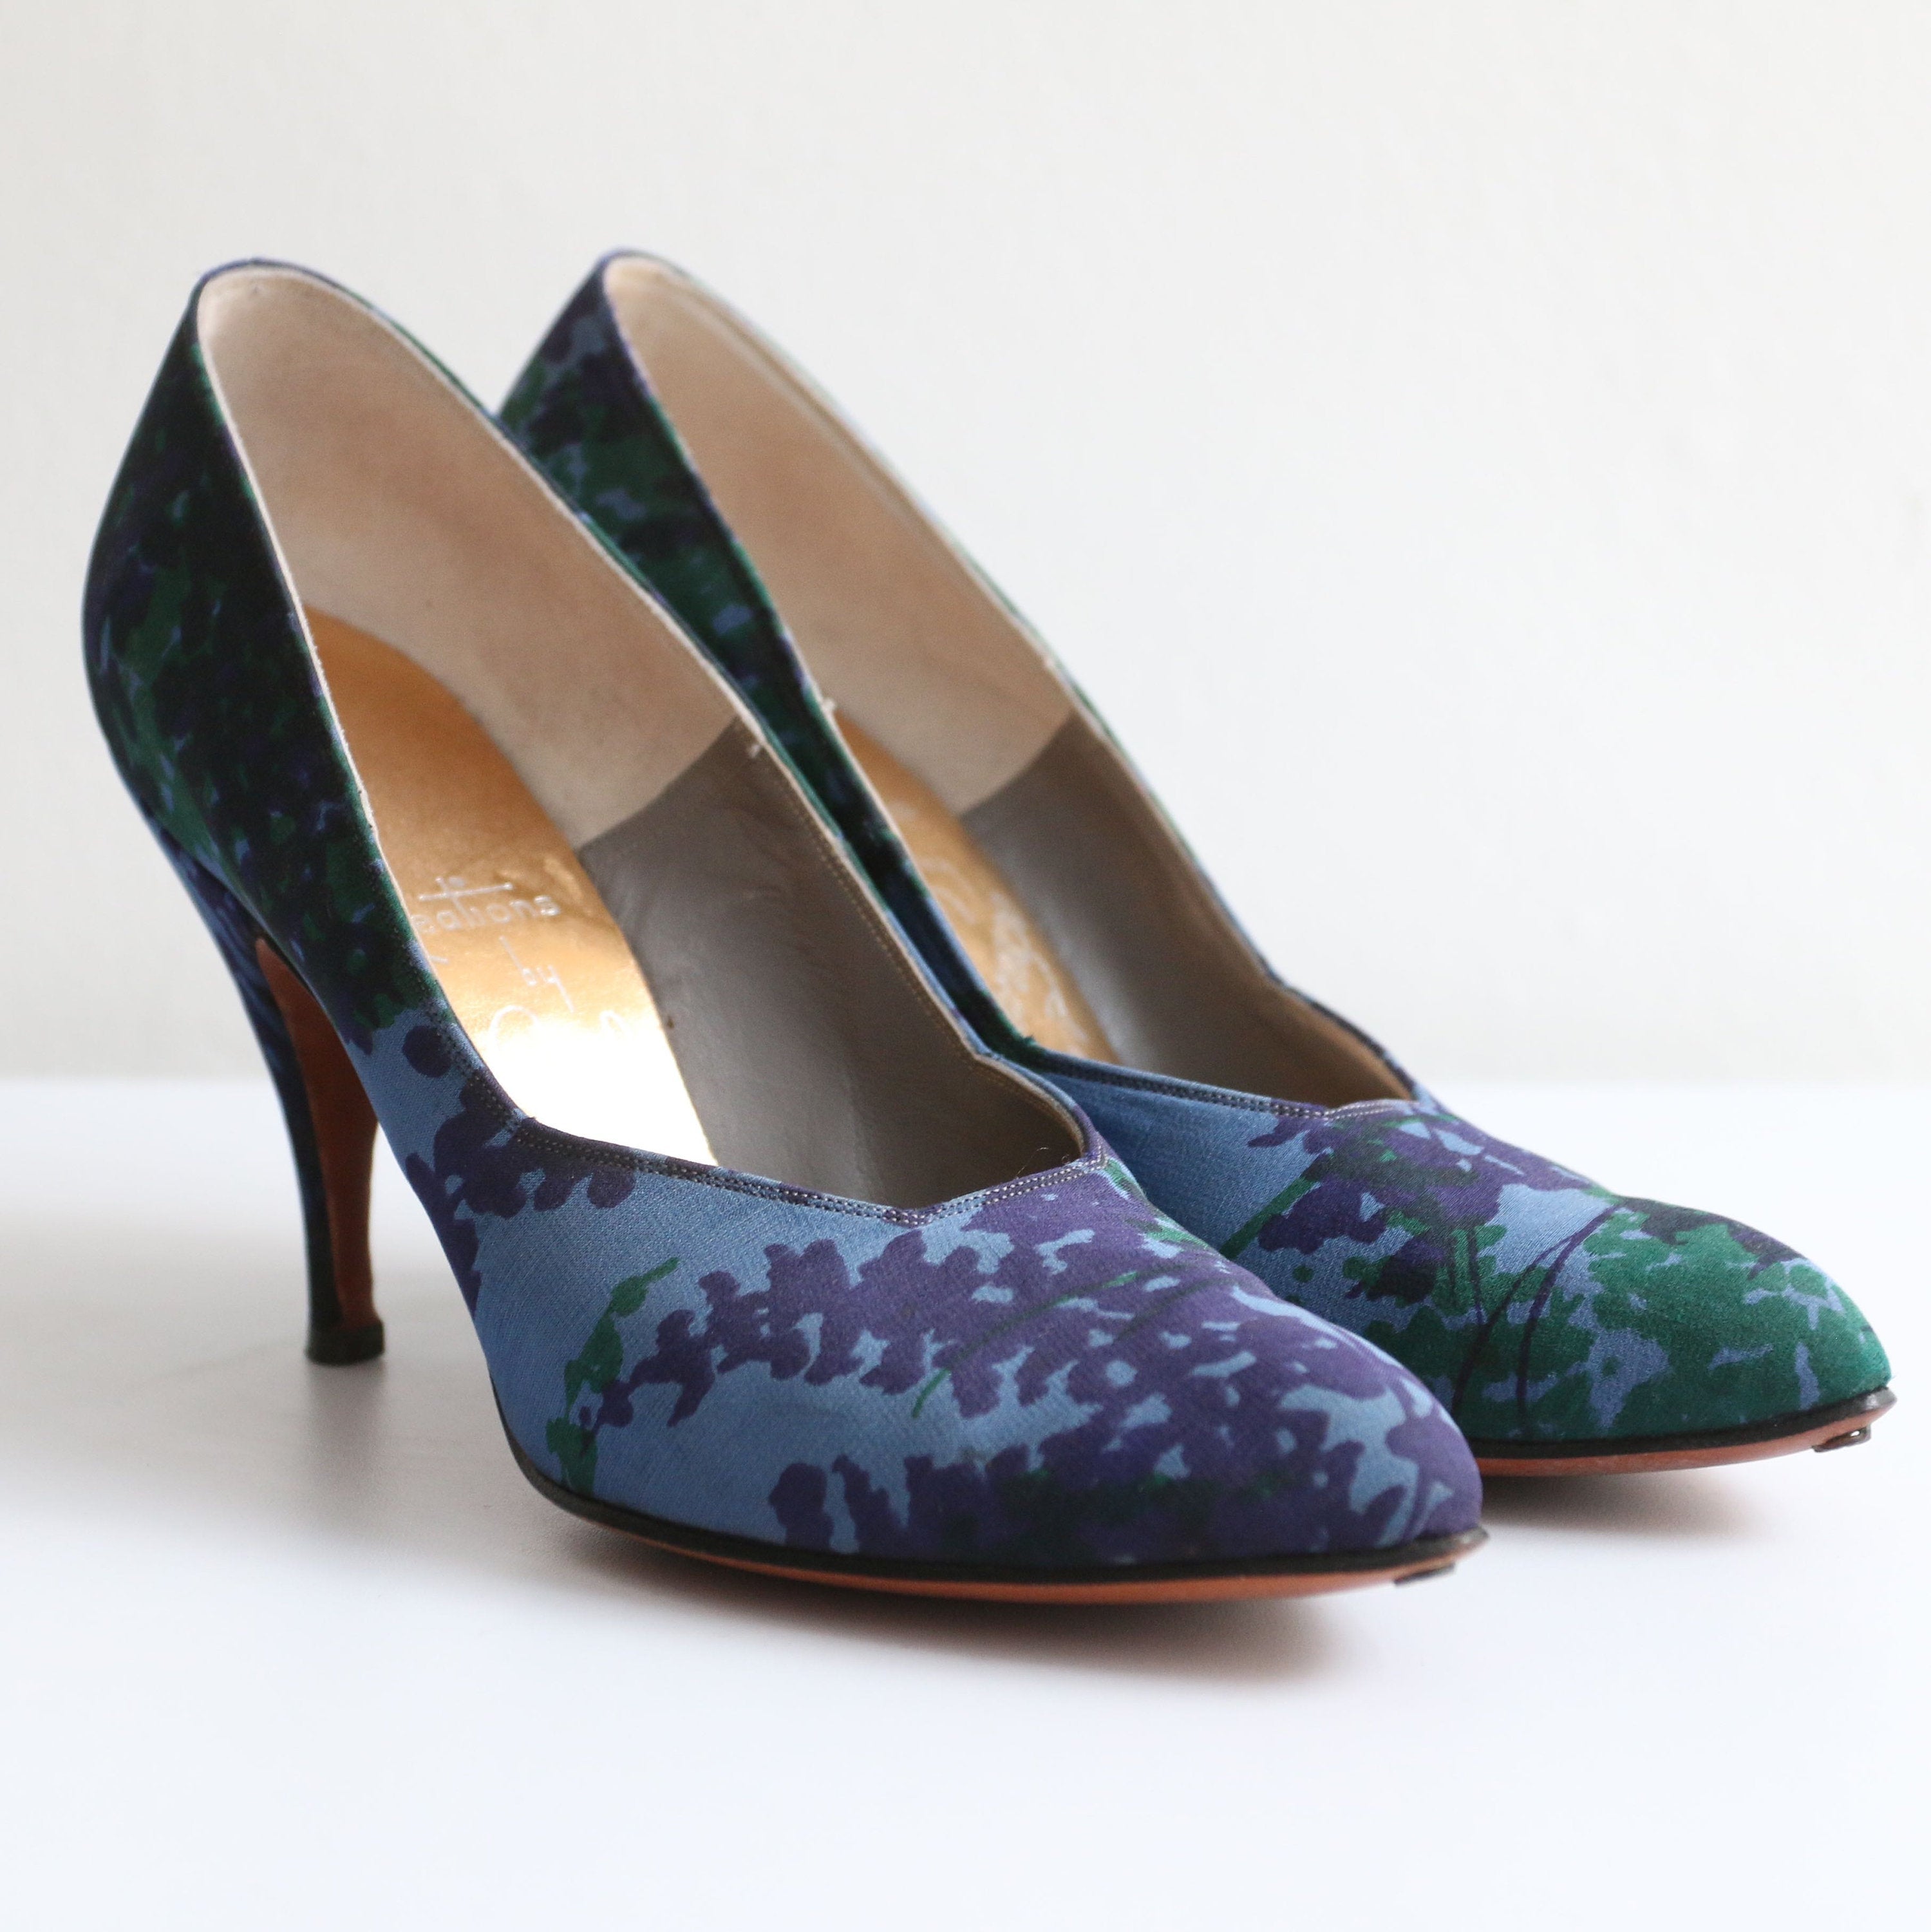 floral court shoes uk